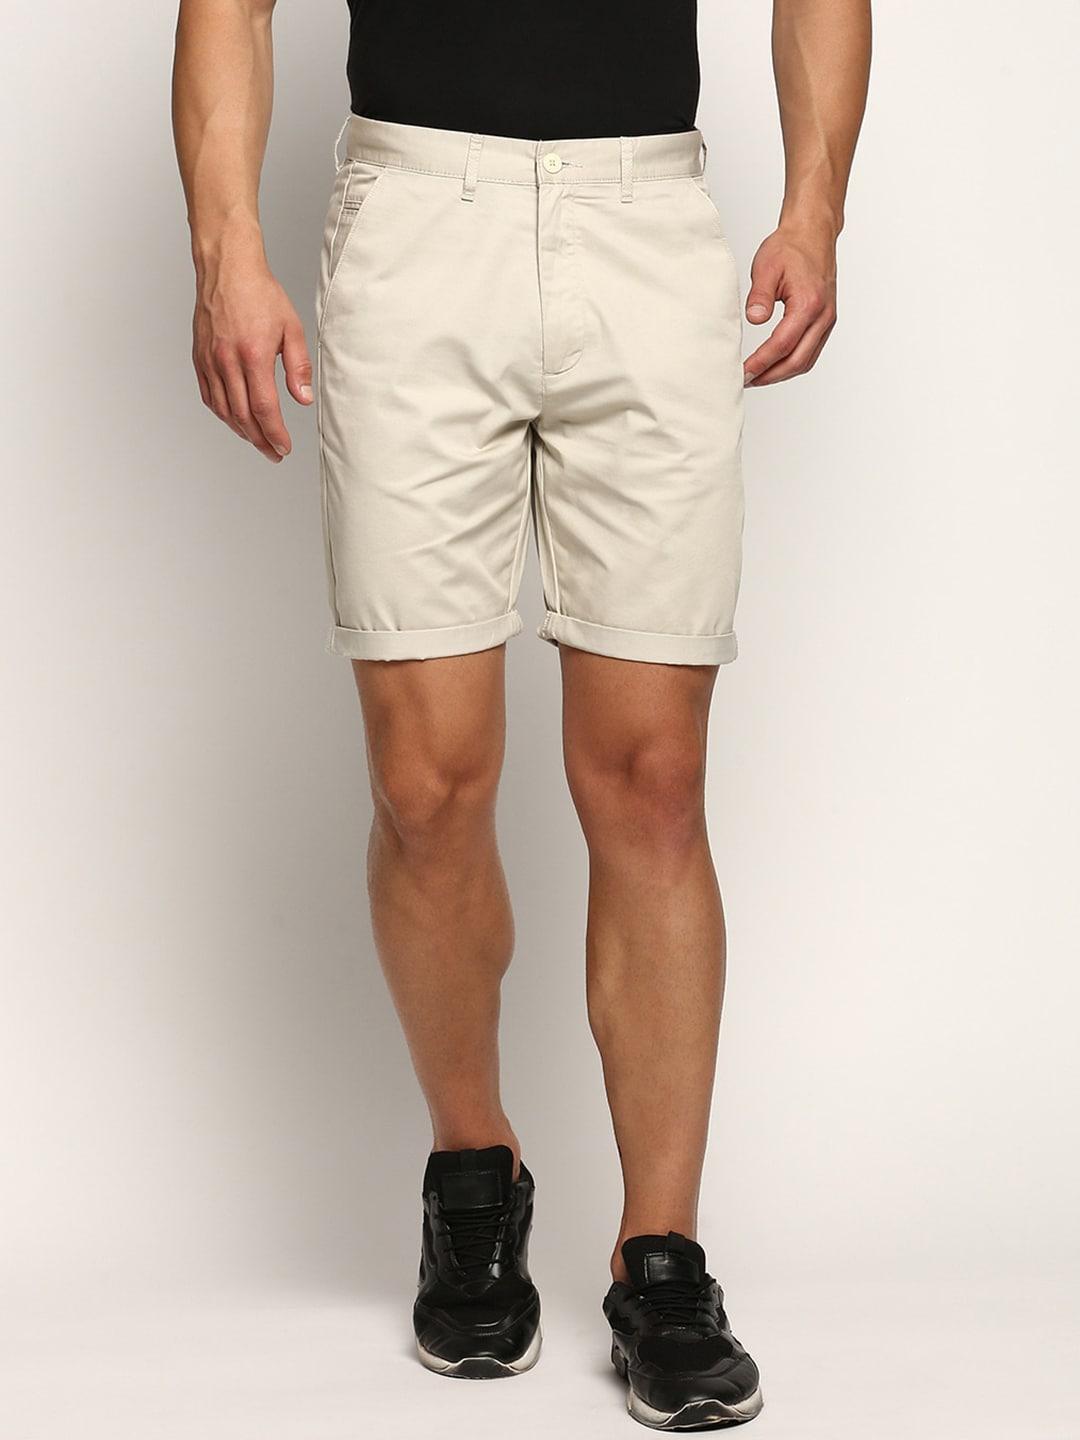 showoff men mid rise cotton chinos shorts